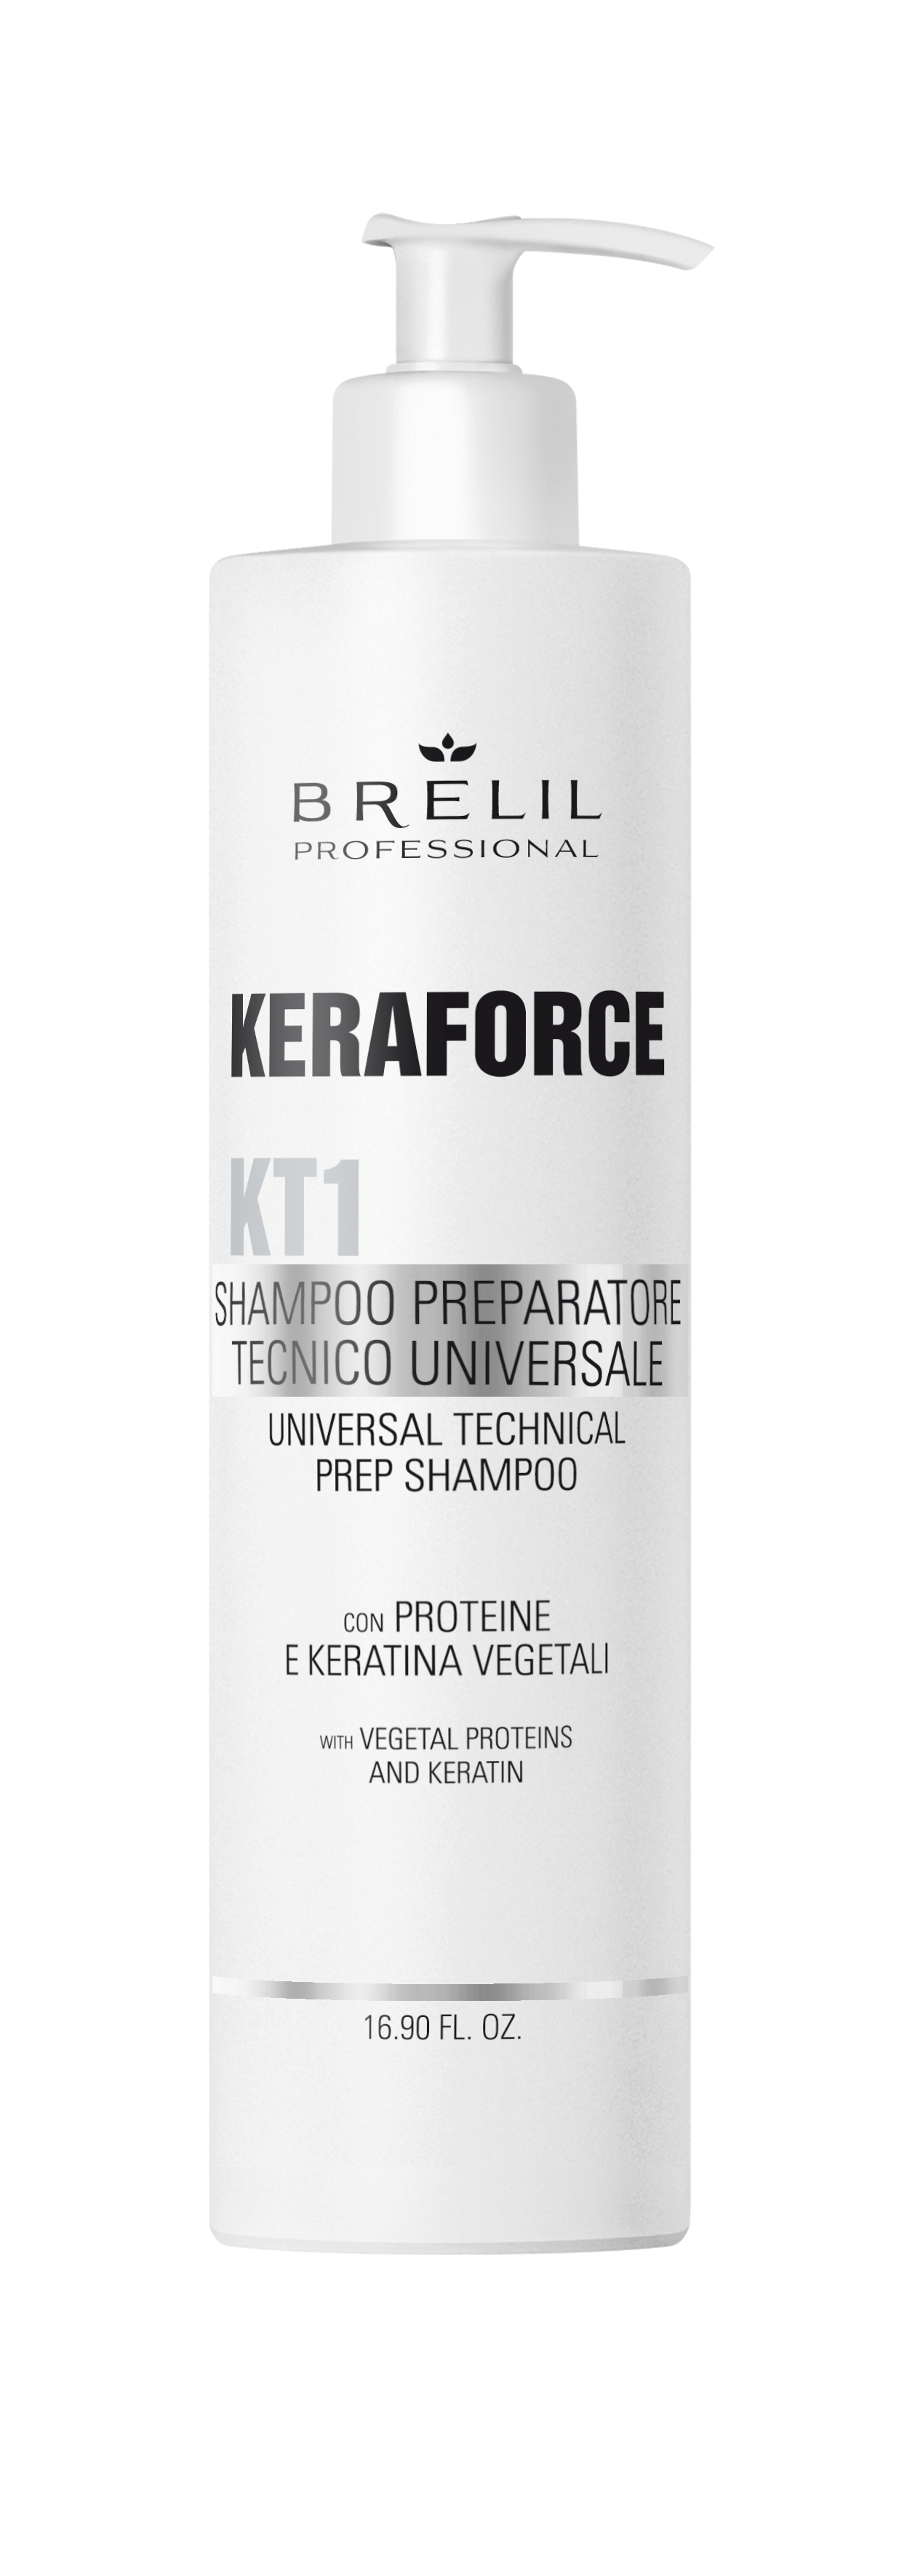 KT1 Shampoo preparatore tecnico universale